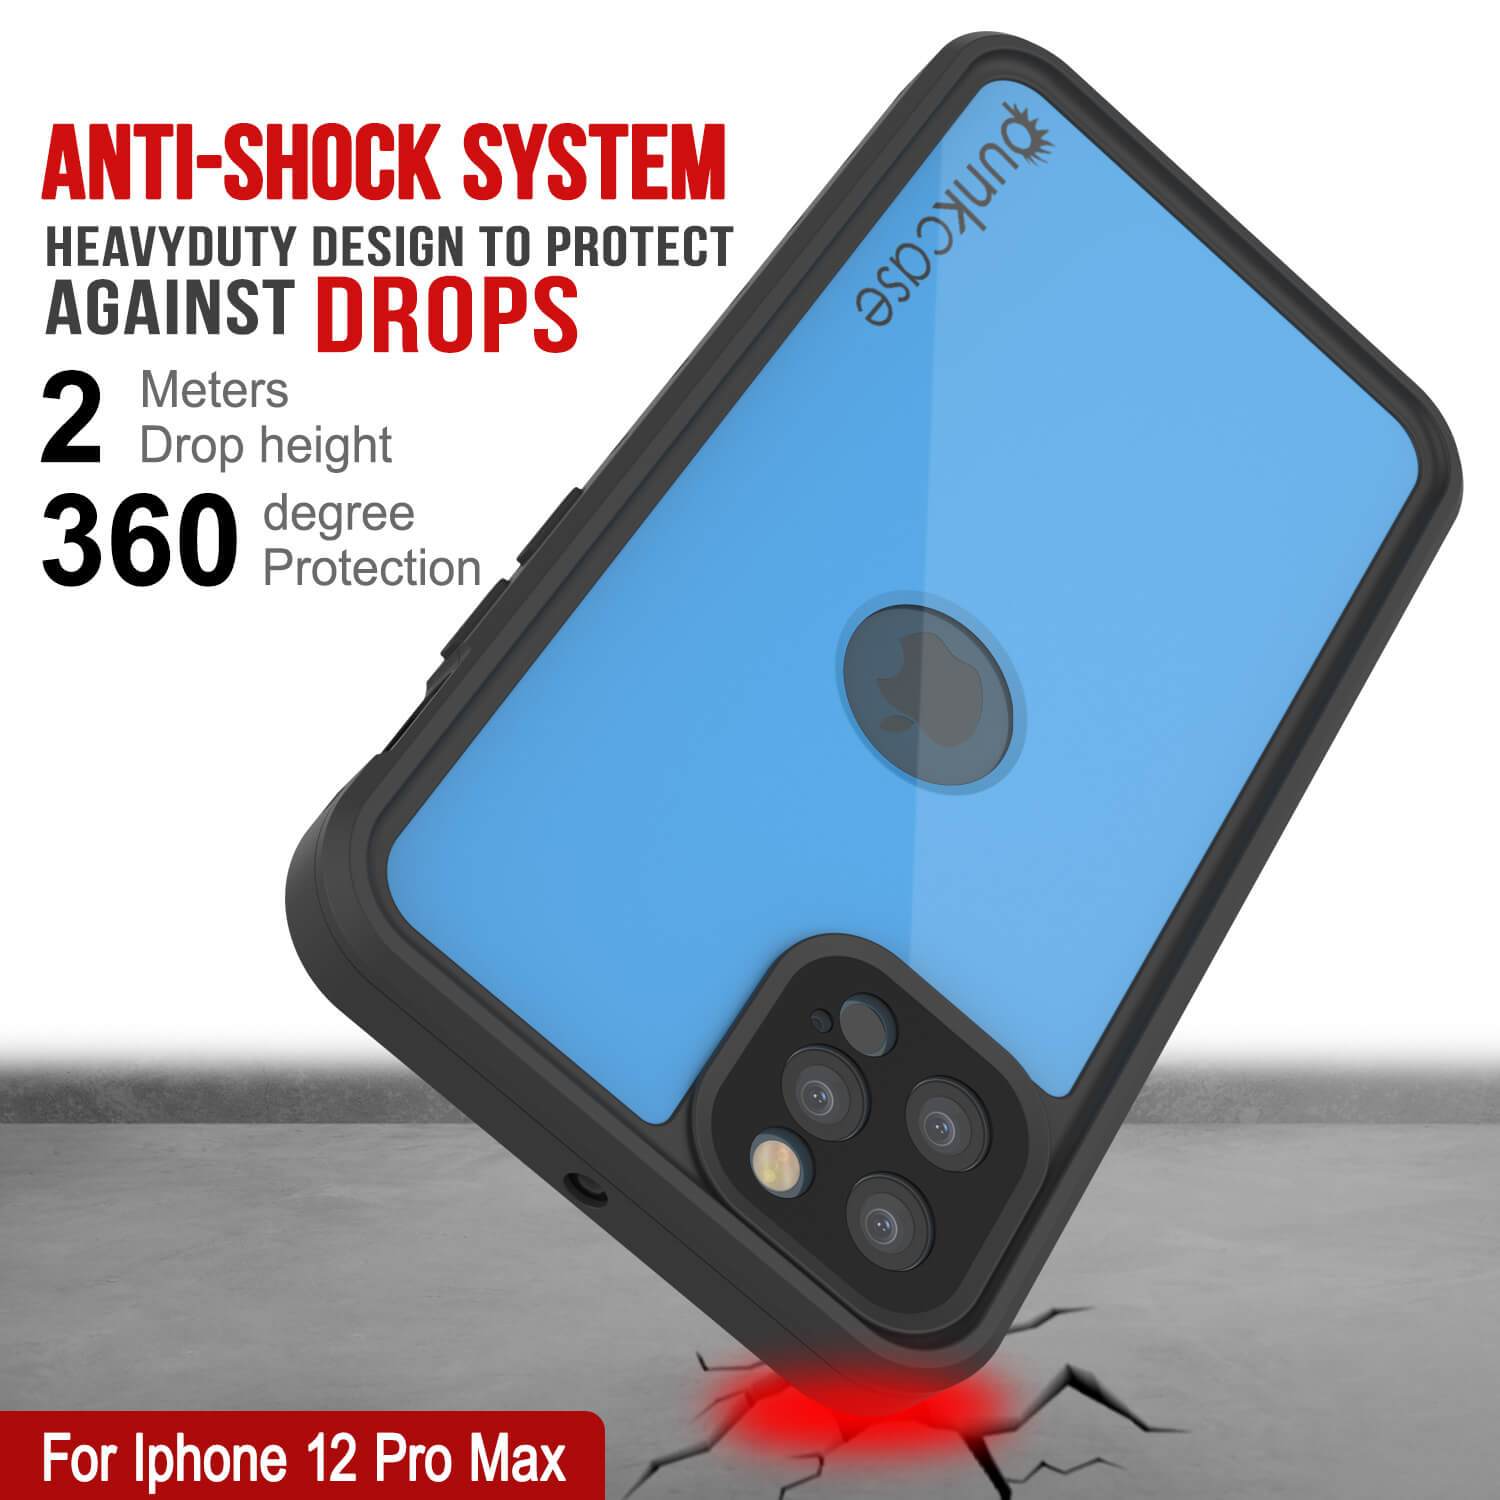 iPhone 12 Pro Max Waterproof IP68 Case, Punkcase [Light blue] [StudStar Series] [Slim Fit] [Dirtproof]